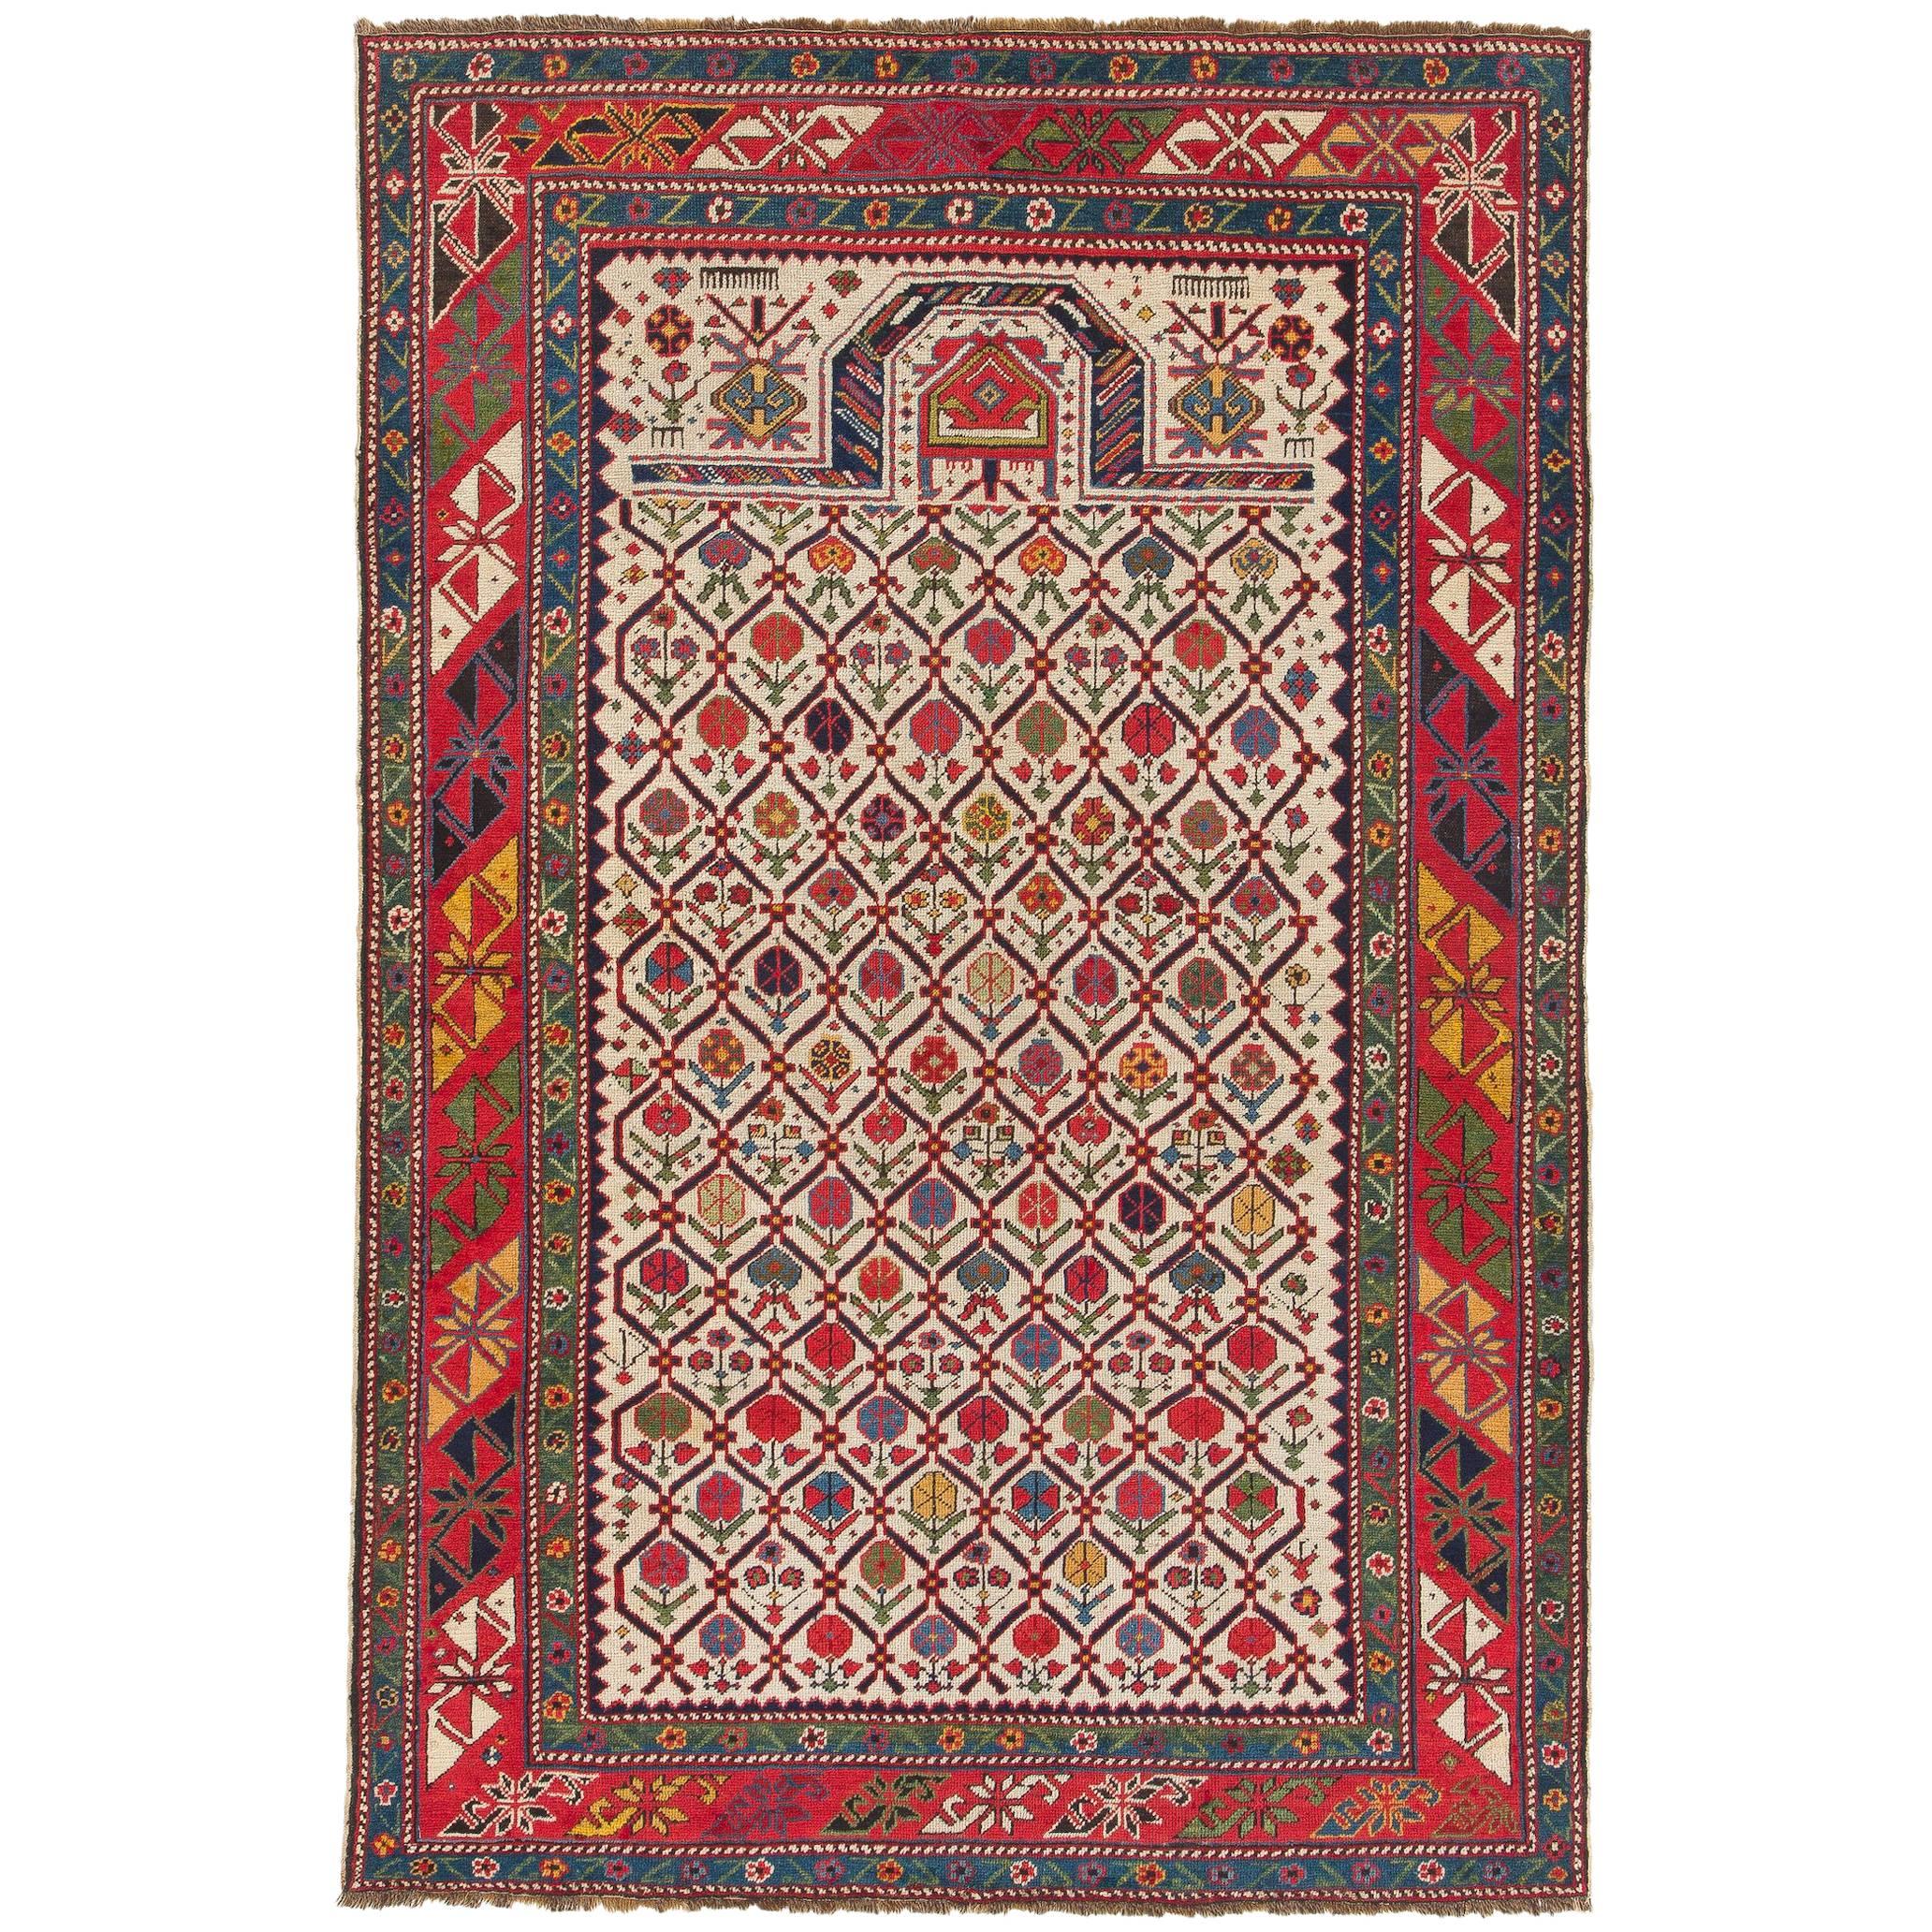 Antique Caucasian Shirvan Prayer Rug, circa 1850